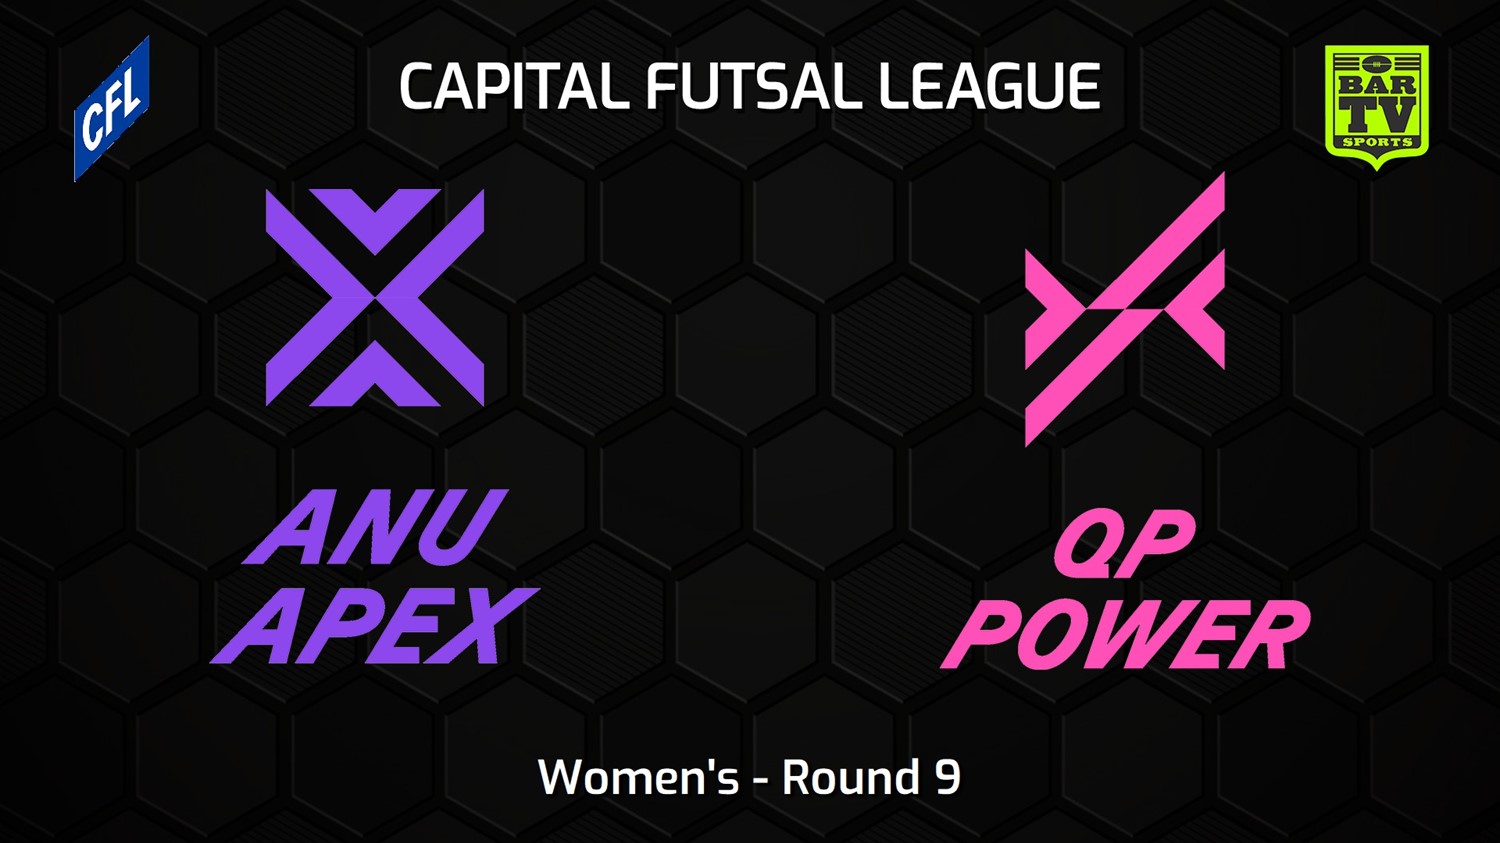 231216-Capital Football Futsal Round 9 - Women's - ANU Apex v Queanbeyan-Palerang Power Minigame Slate Image